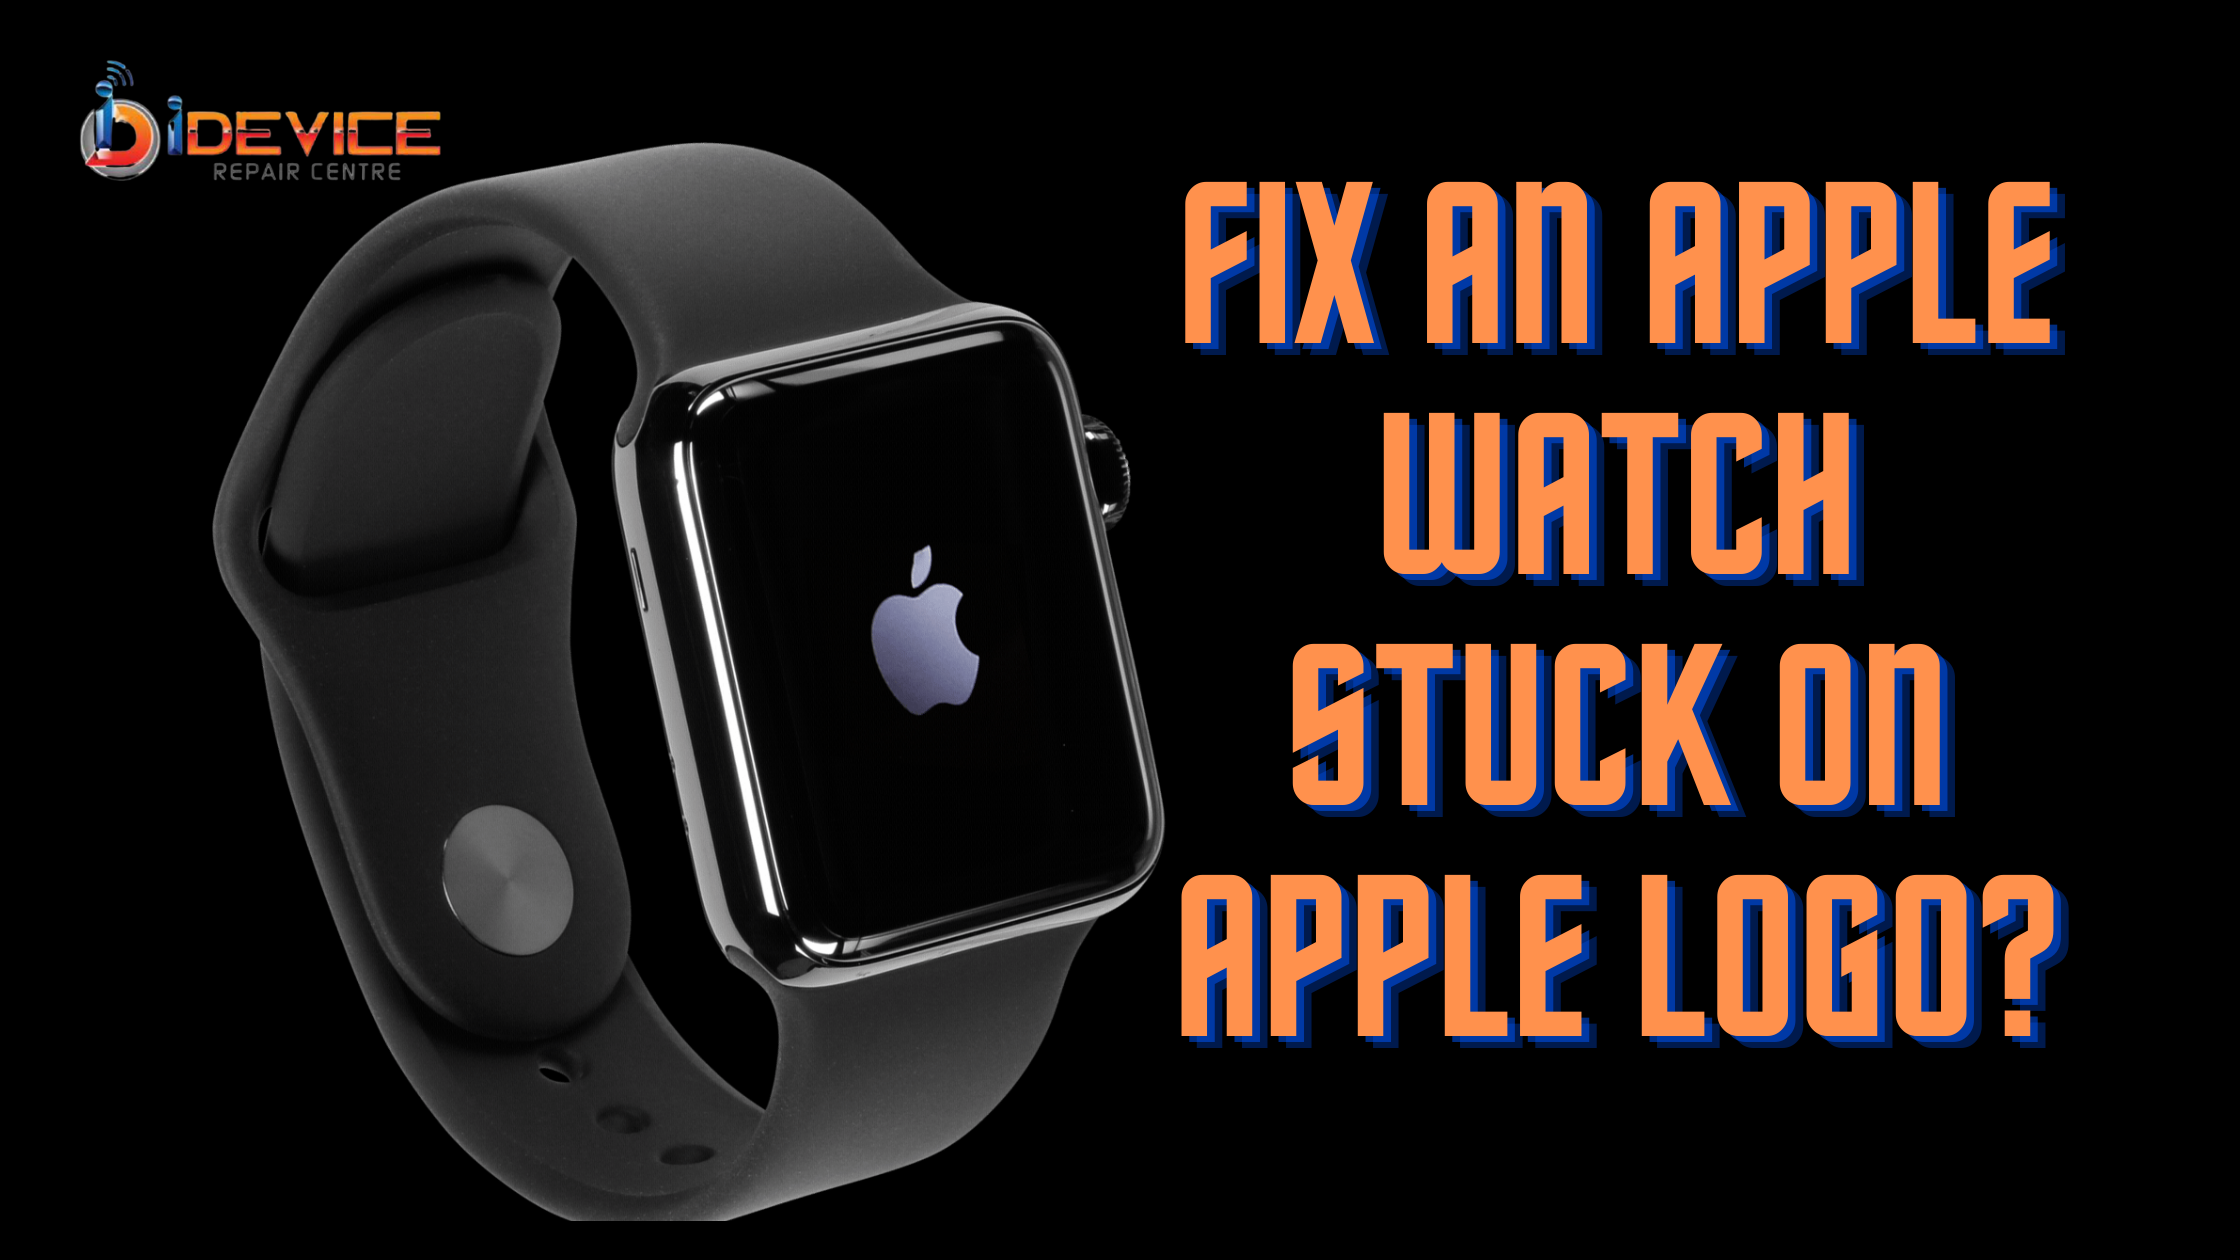 How to Fix an Apple Watch Stuck on Apple Logo?